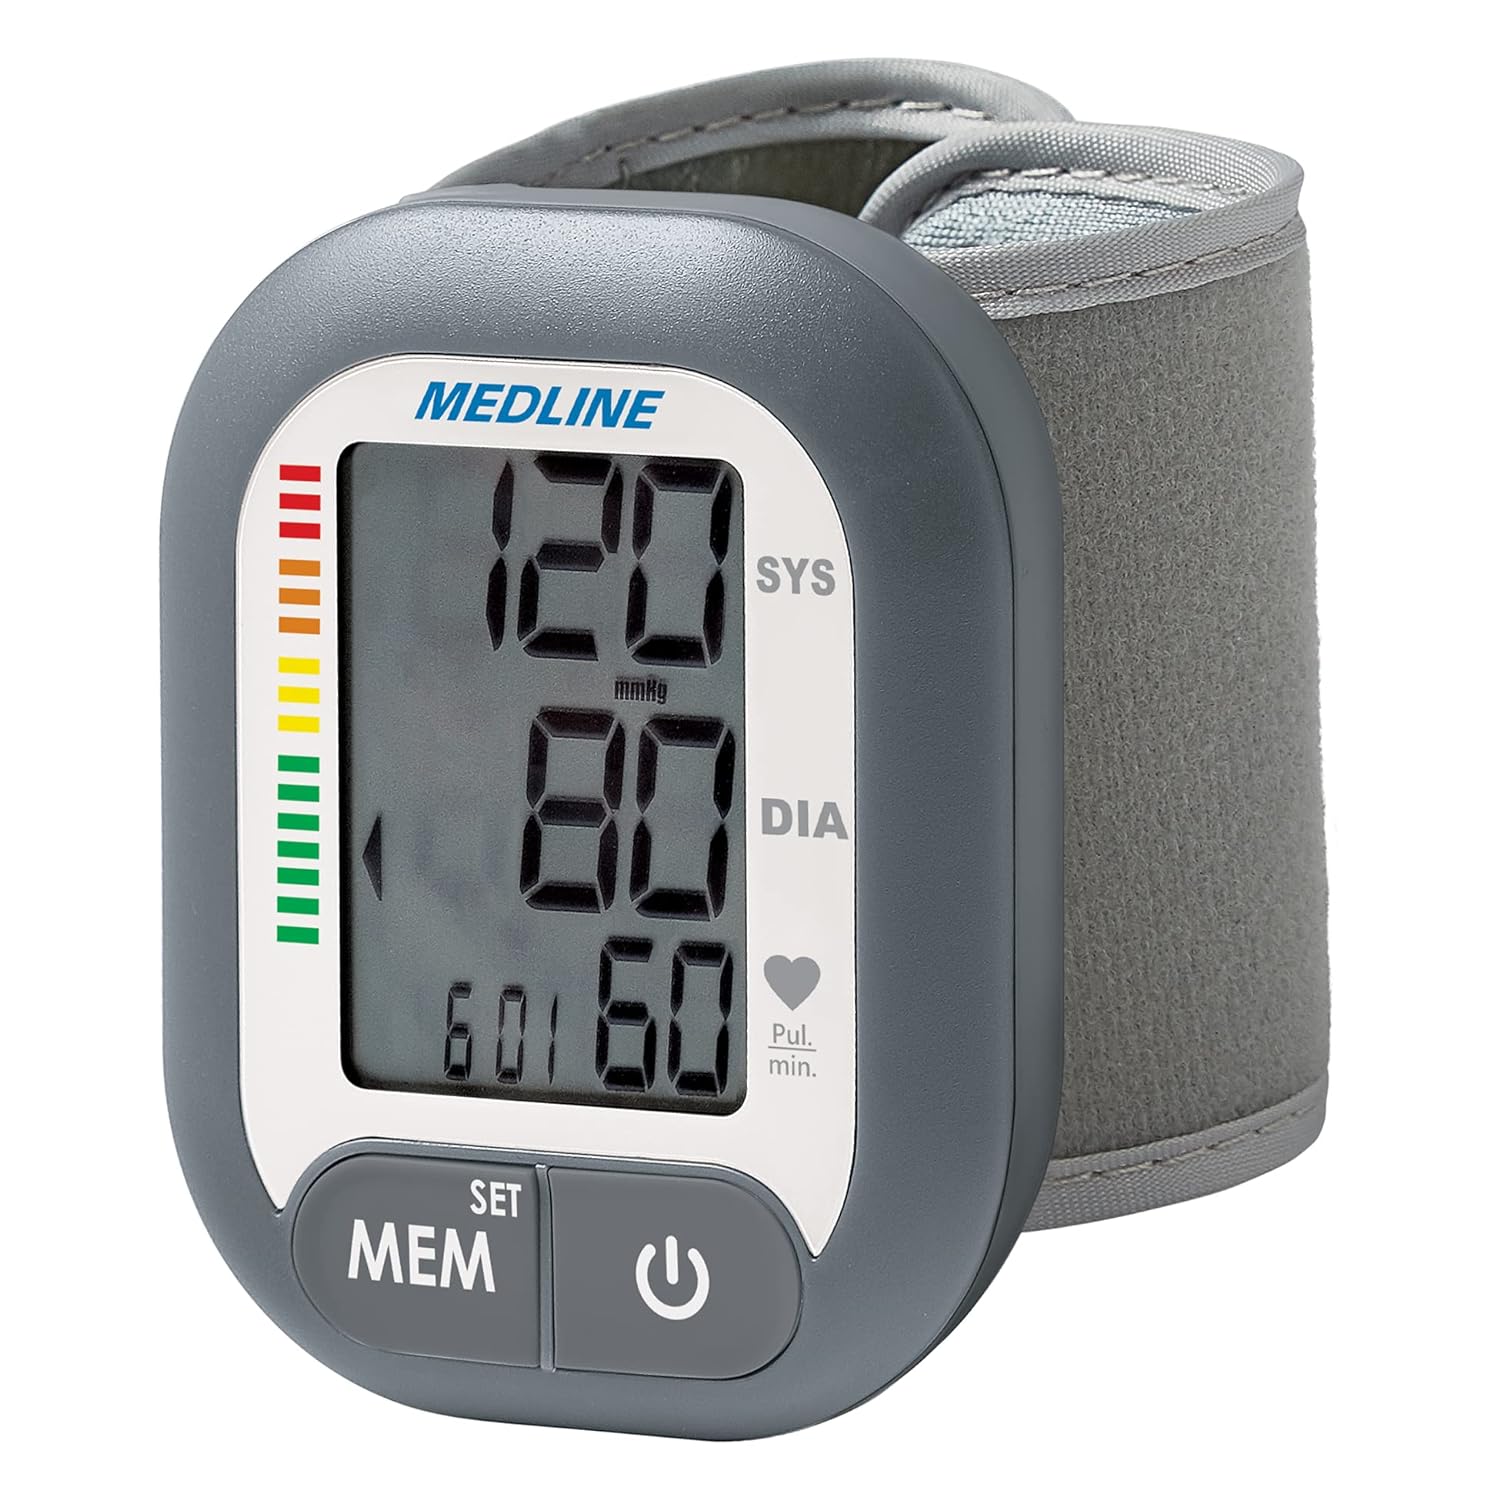 Medline Digital Wrist Blood Pressure Monitor Review